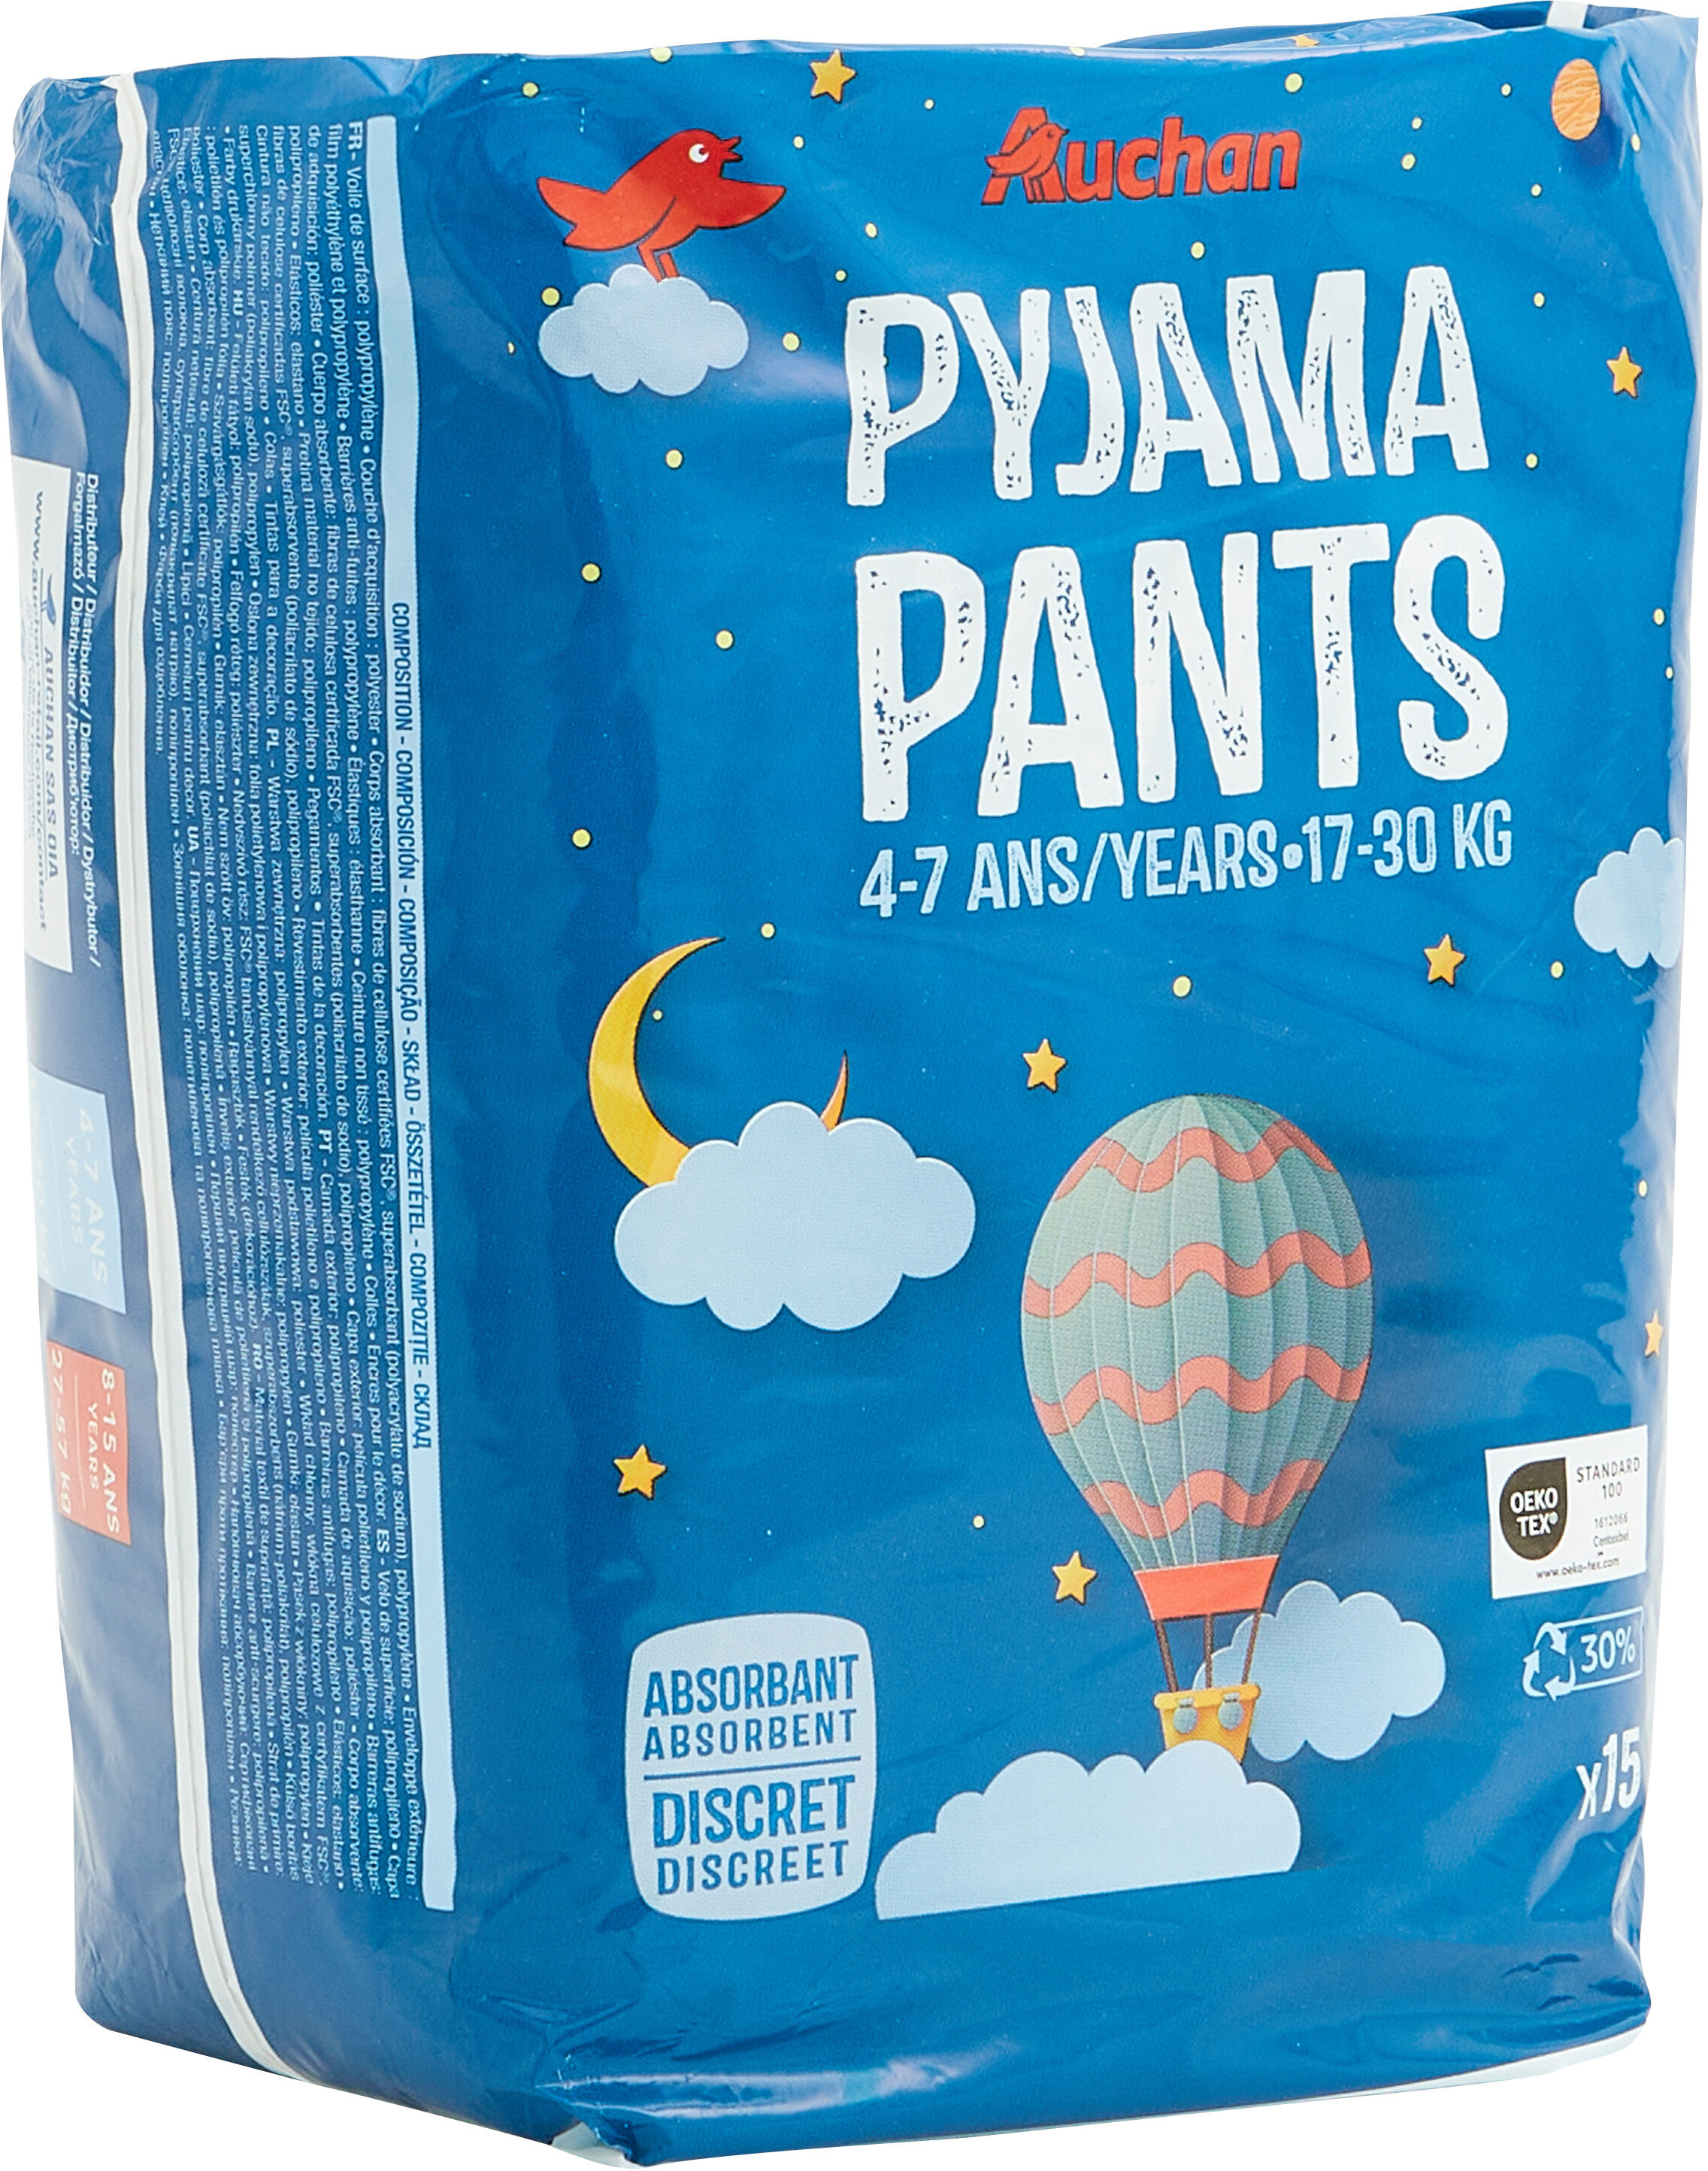 Pyjama Pants 4-7 ans - 17-30 KG - 製品 - fr